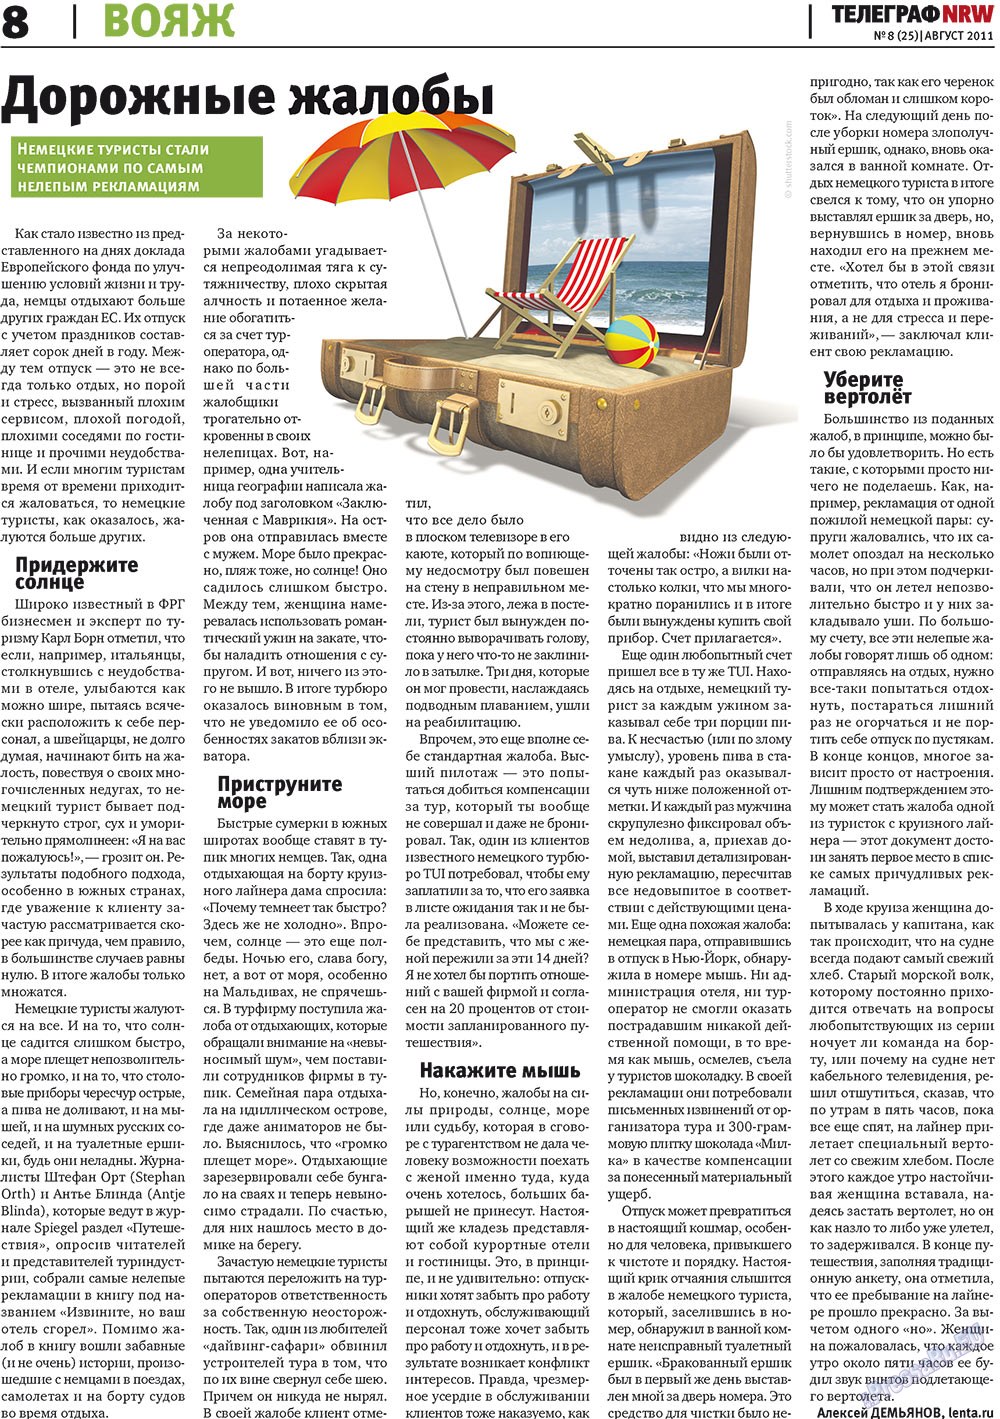 Телеграф NRW, газета. 2011 №8 стр.8